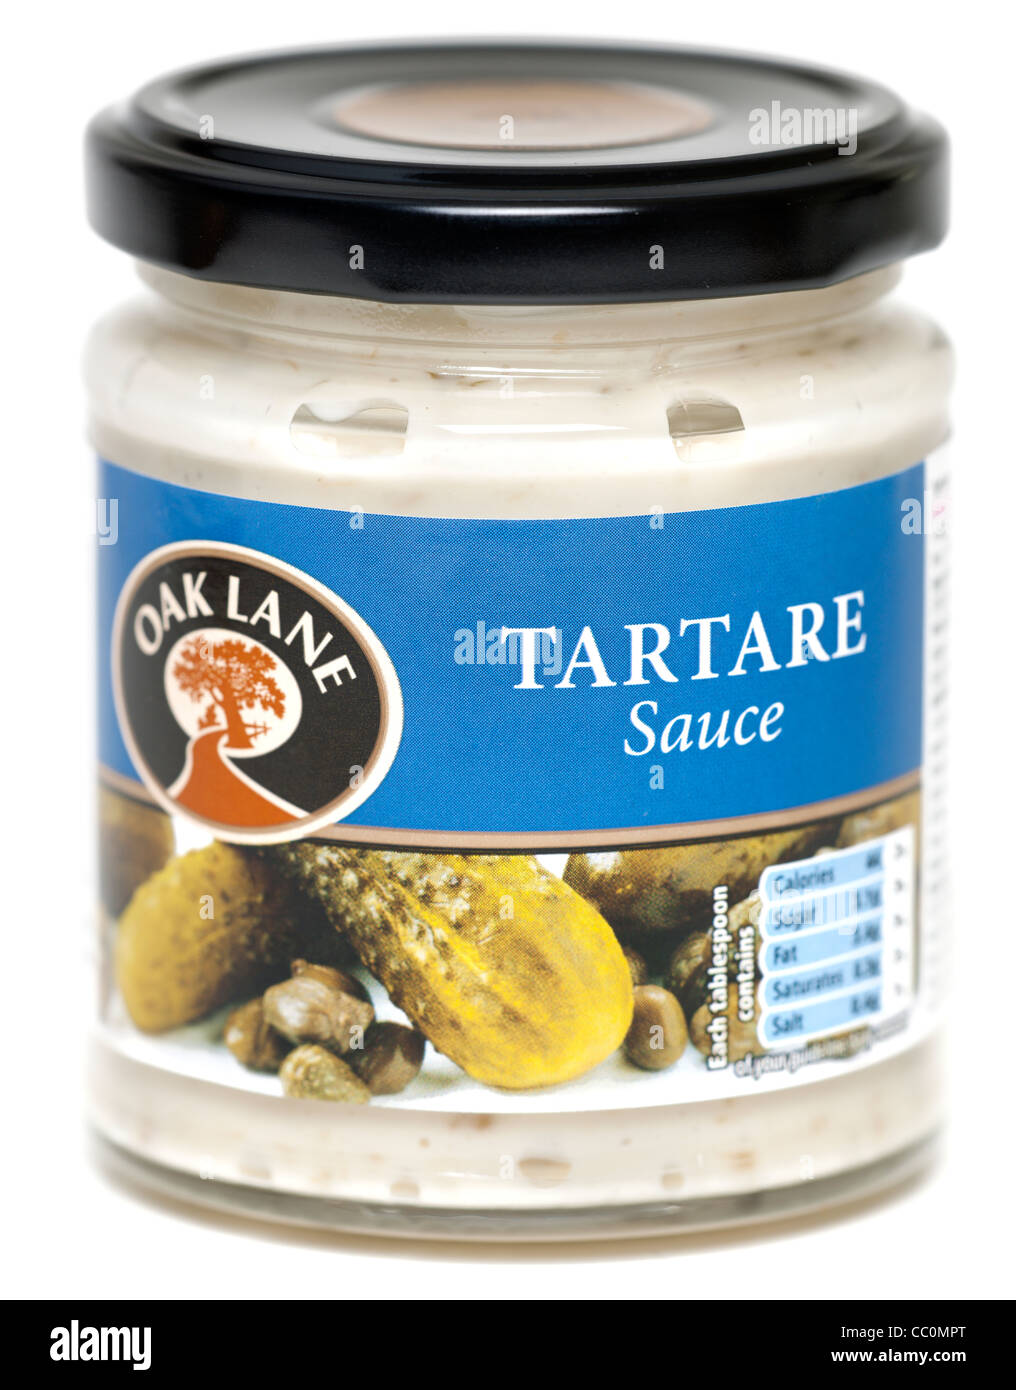 Jar of Oak Lane Tartare sauce Stock Photo